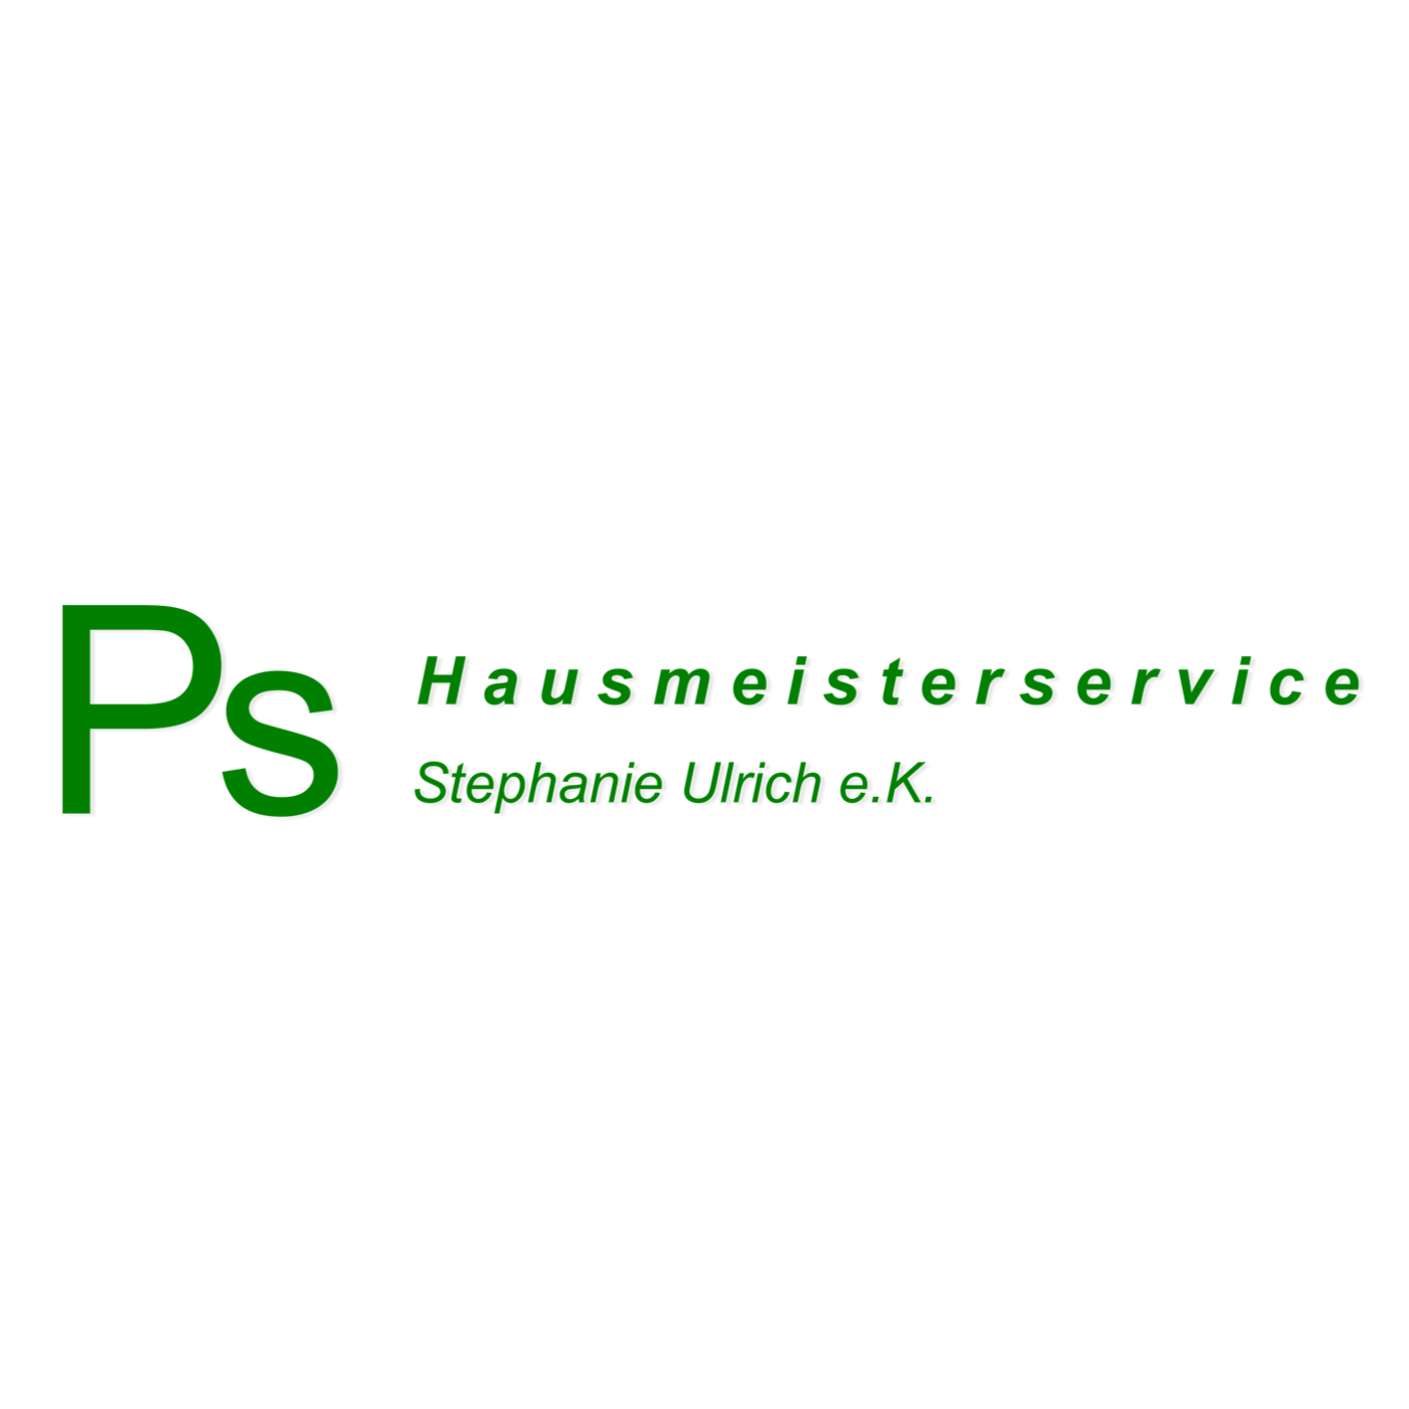 PS Hausmeisterservice Logo